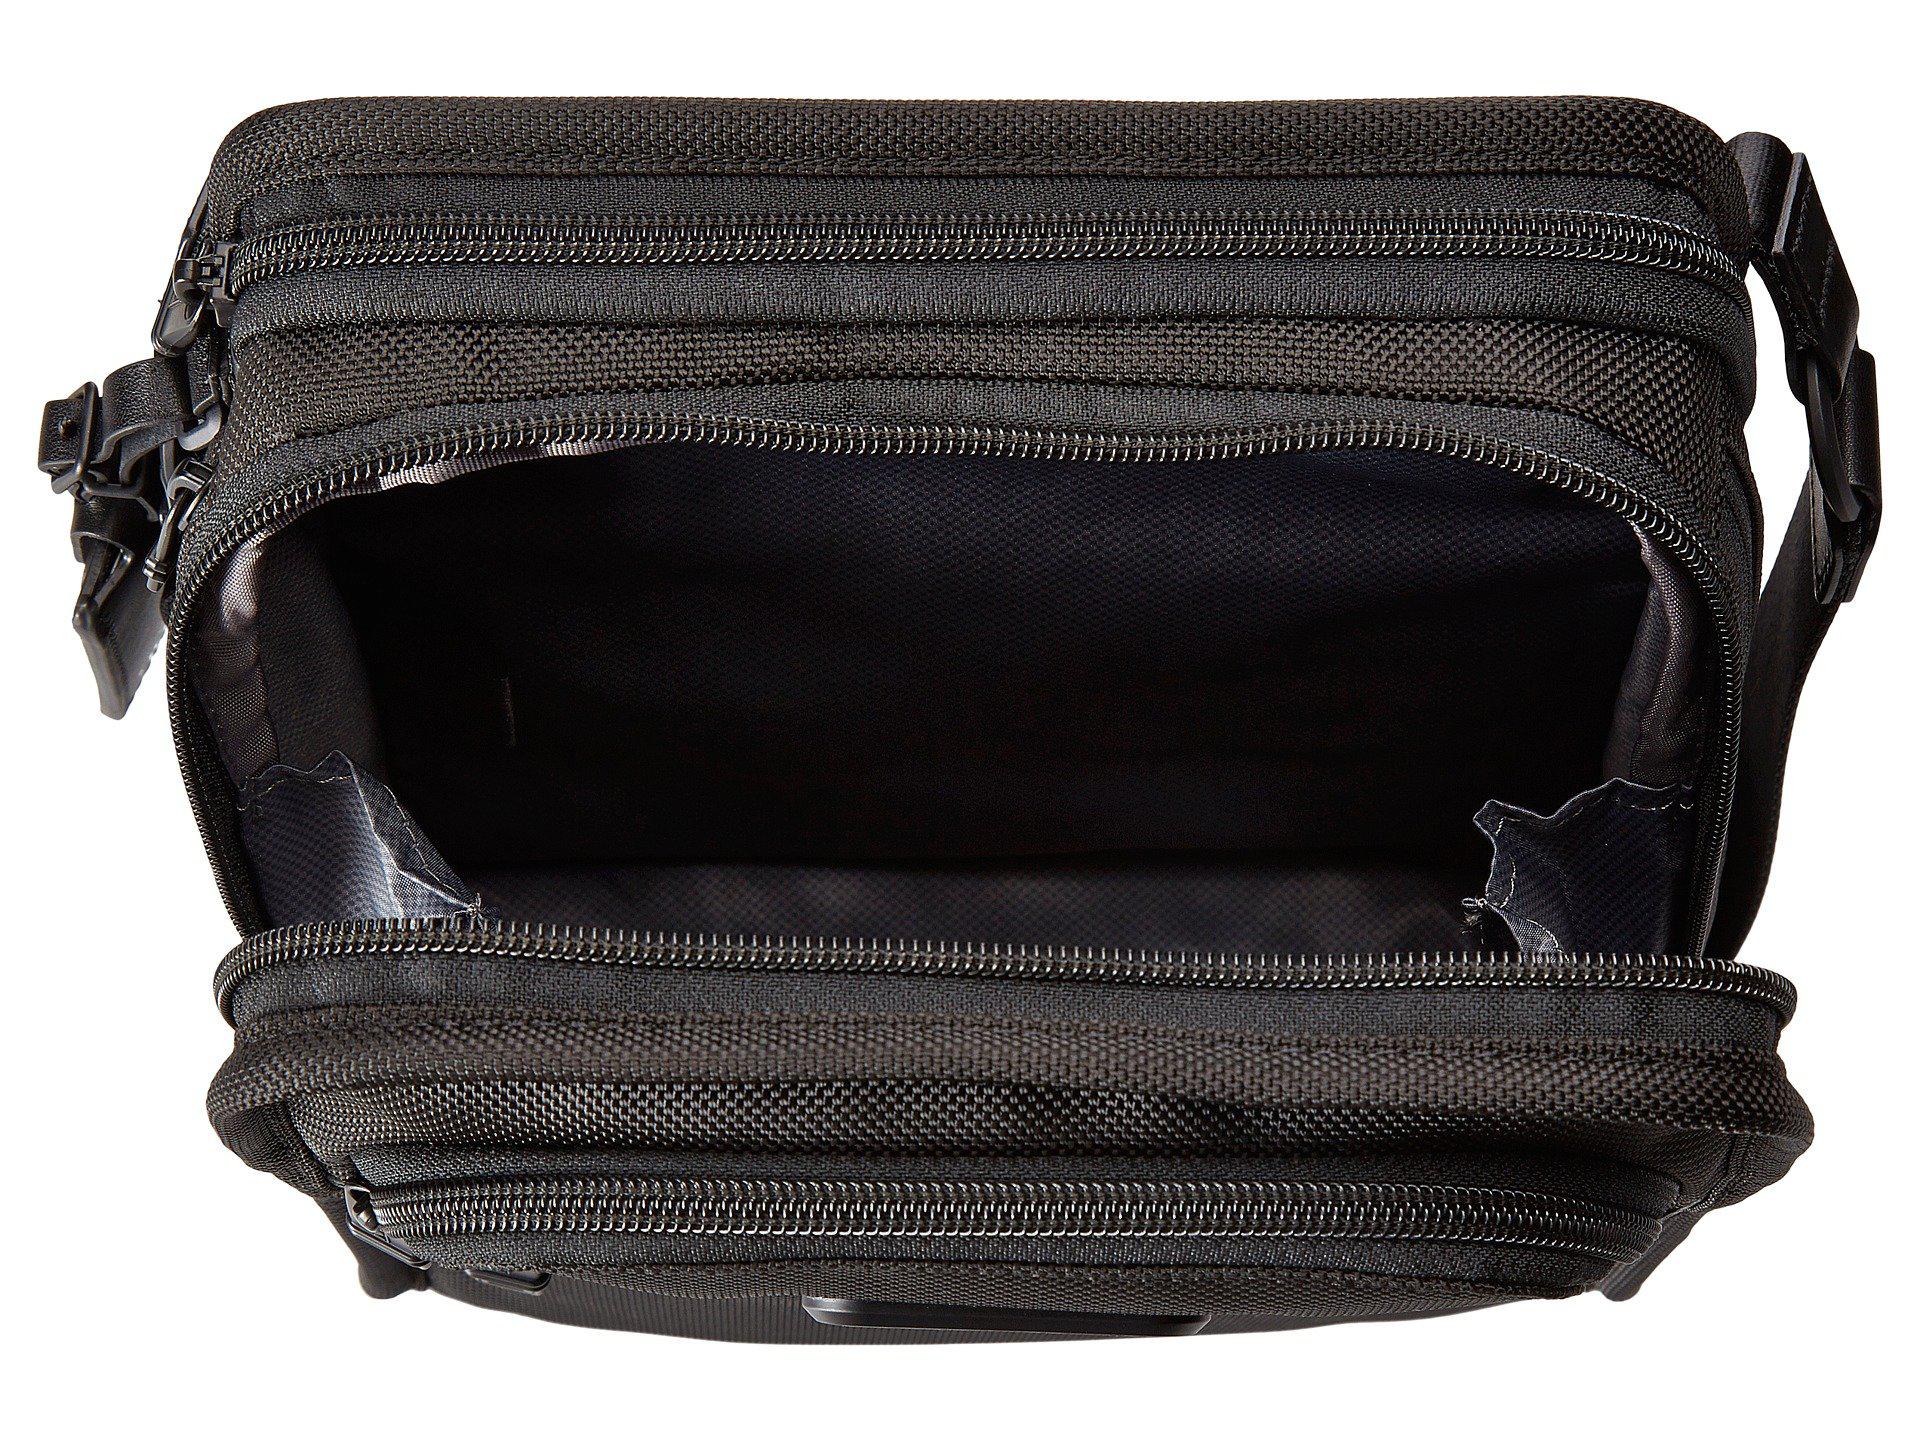 Tumi Alpha 2 - Organizer Travel Tote (black) Tote Handbags in Black for Men - Lyst